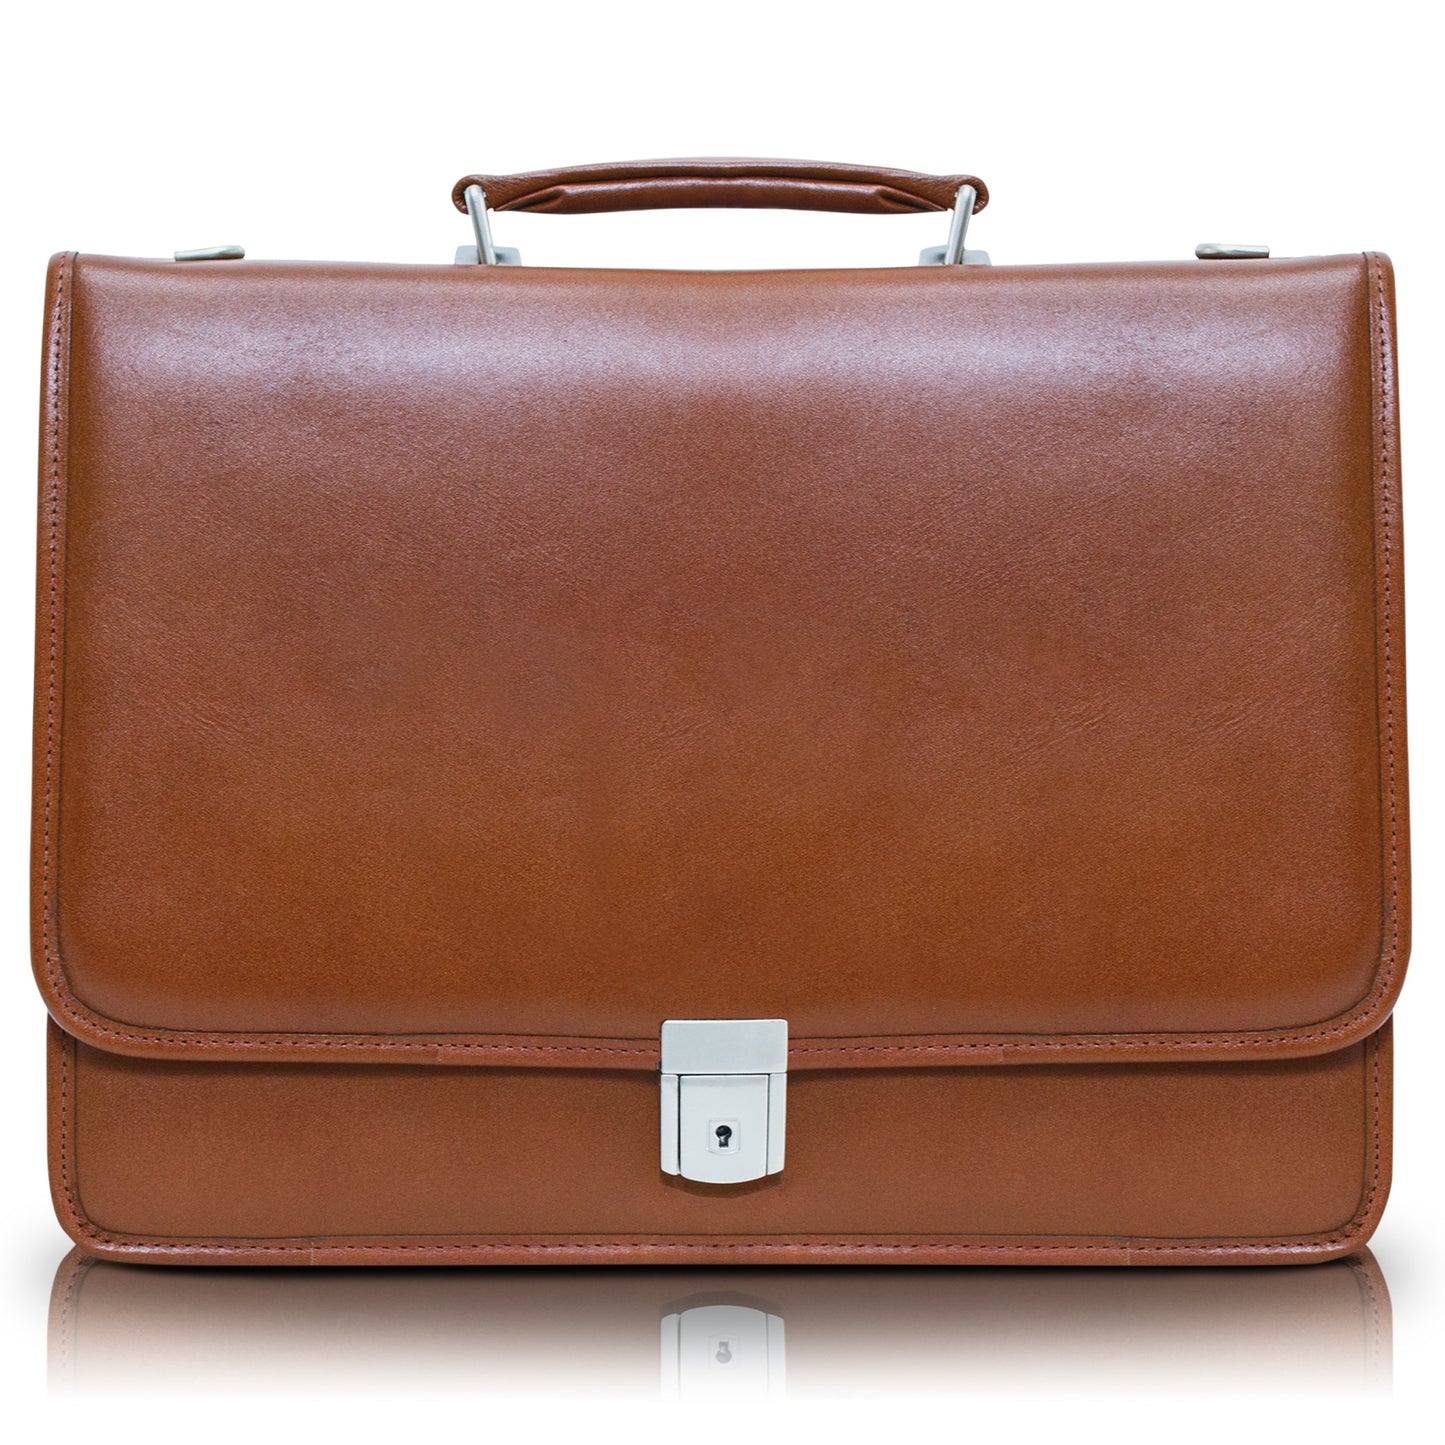 Soft Leather Handbag Briefcase - Smooth Nice Leather